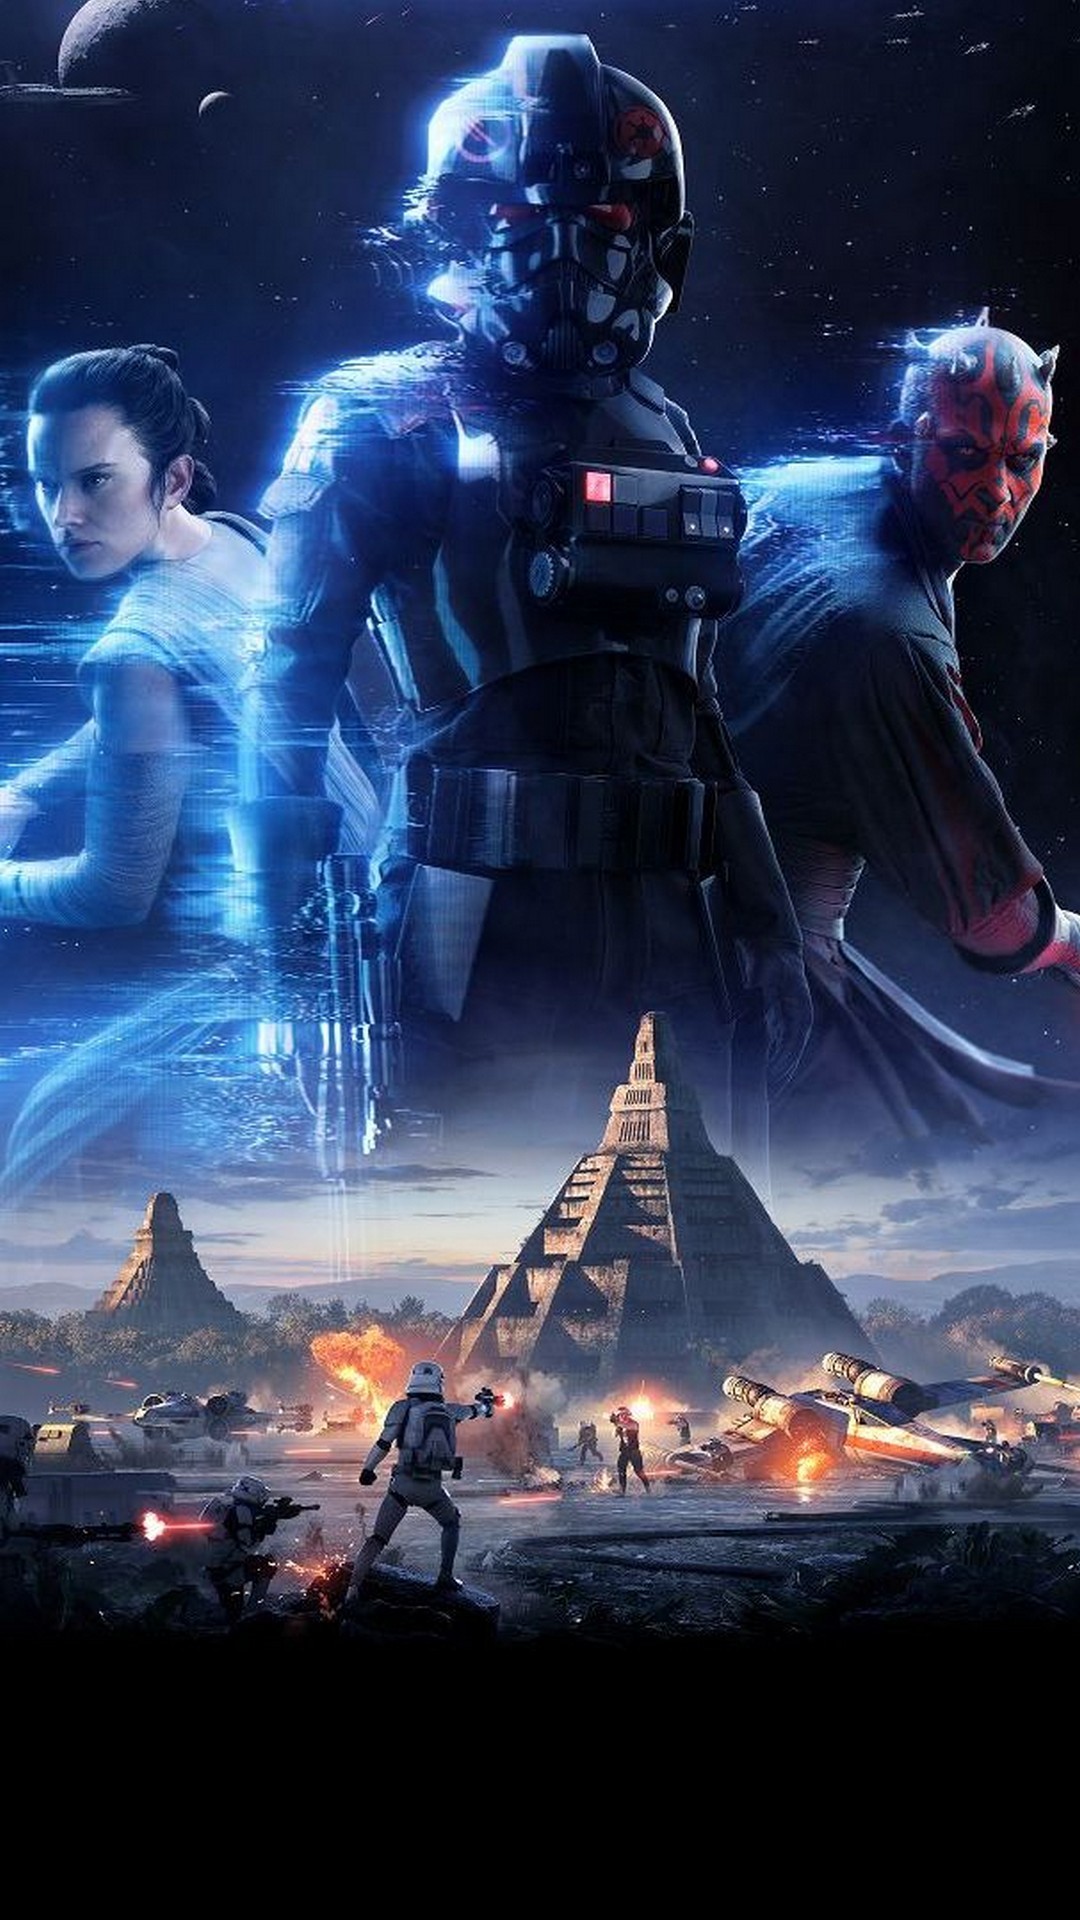 1080x1920 Star Wars Battlefront 2 Games iPhone Wallpaper resolution 